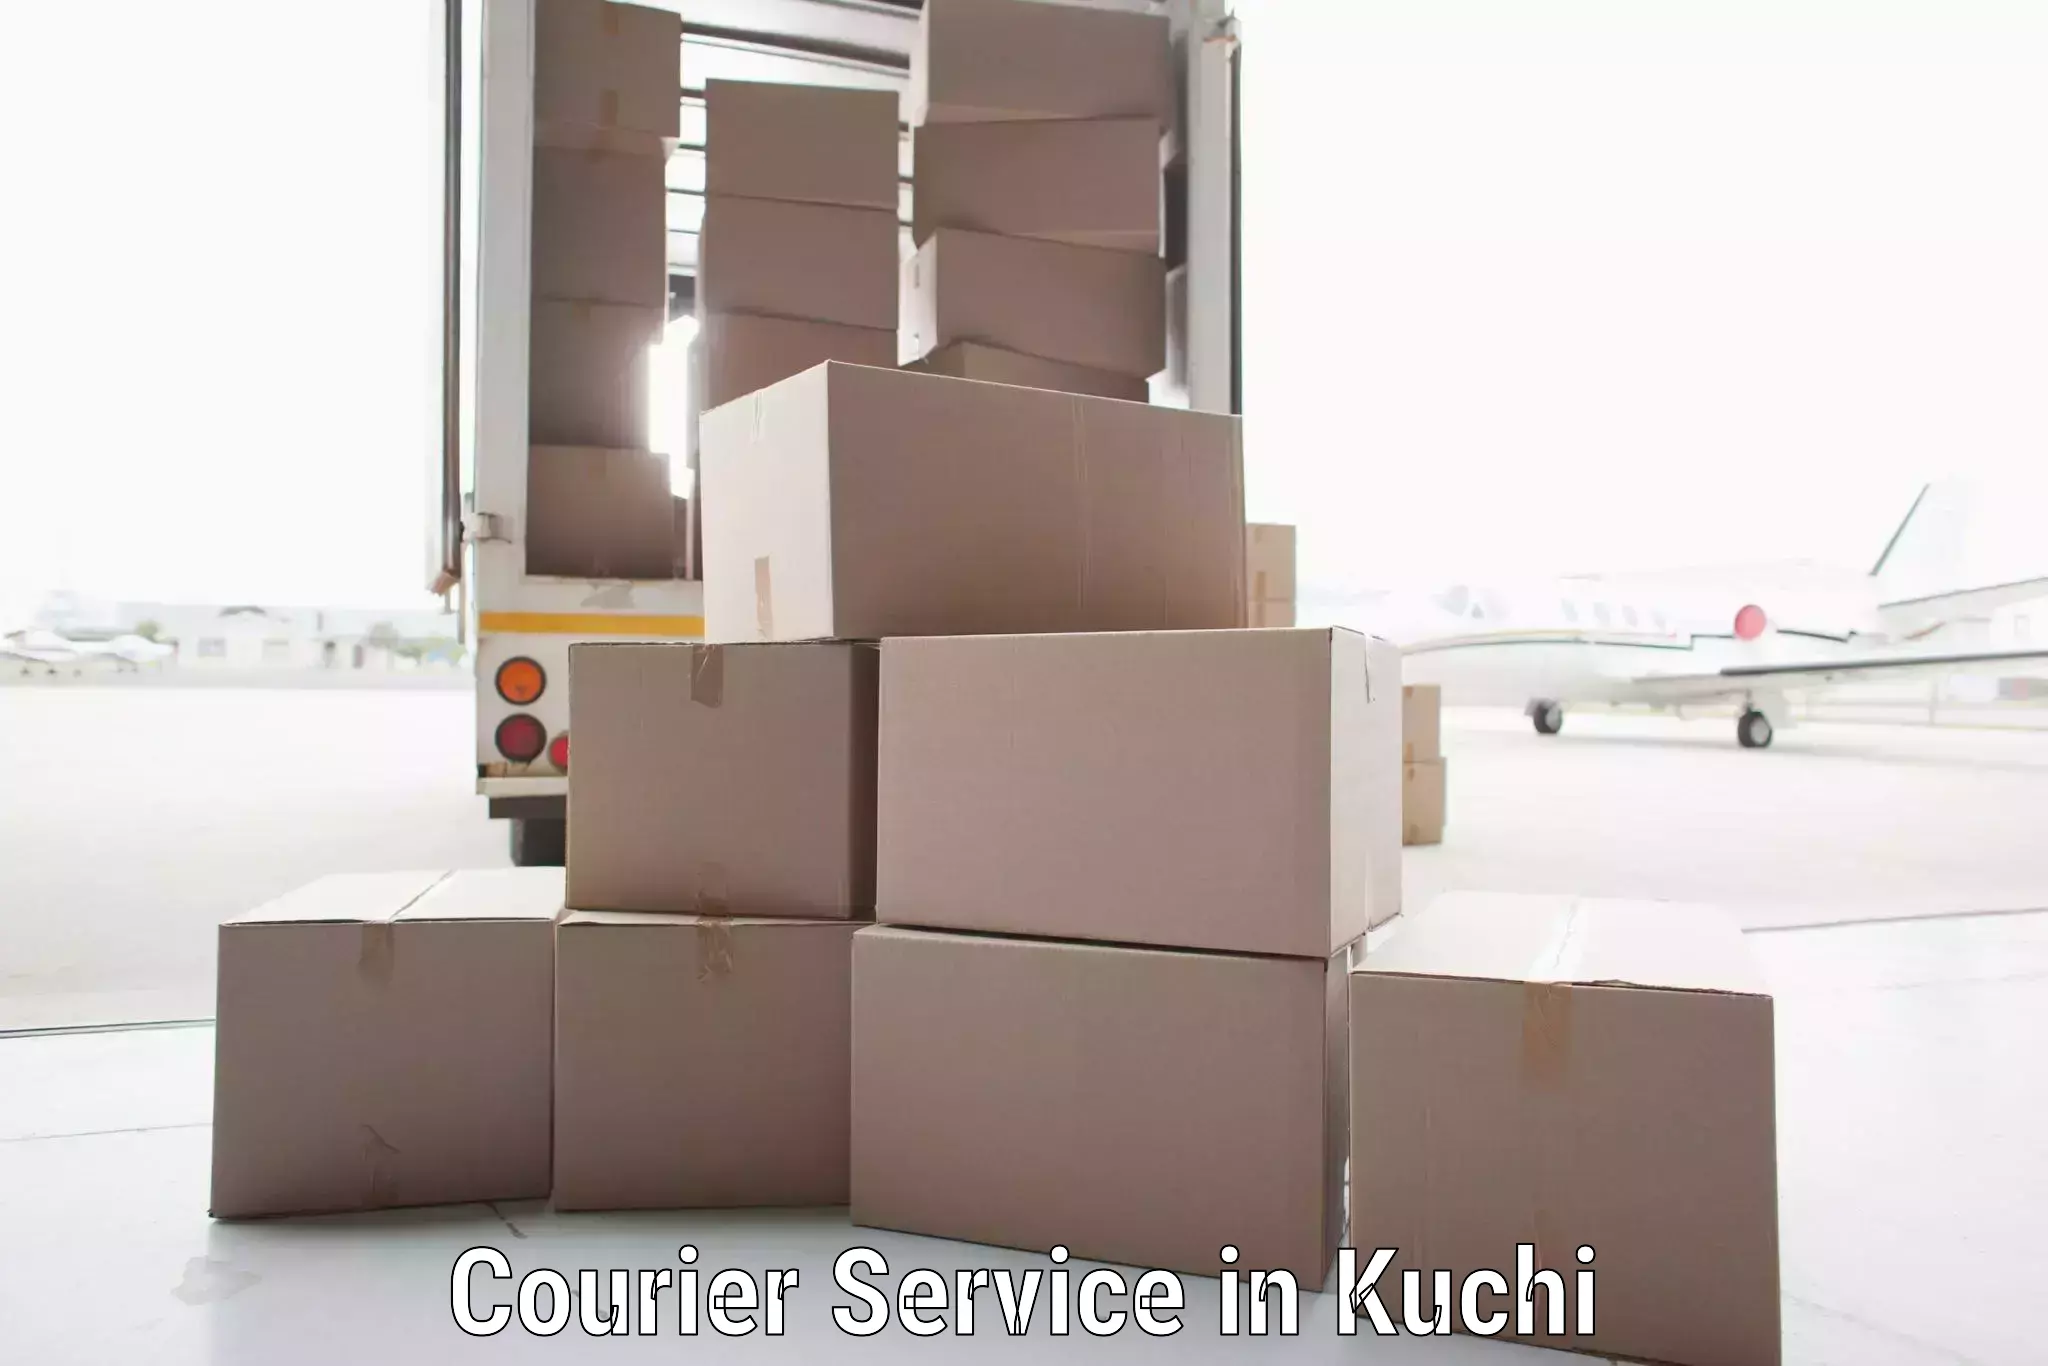 Remote area delivery in Kuchi